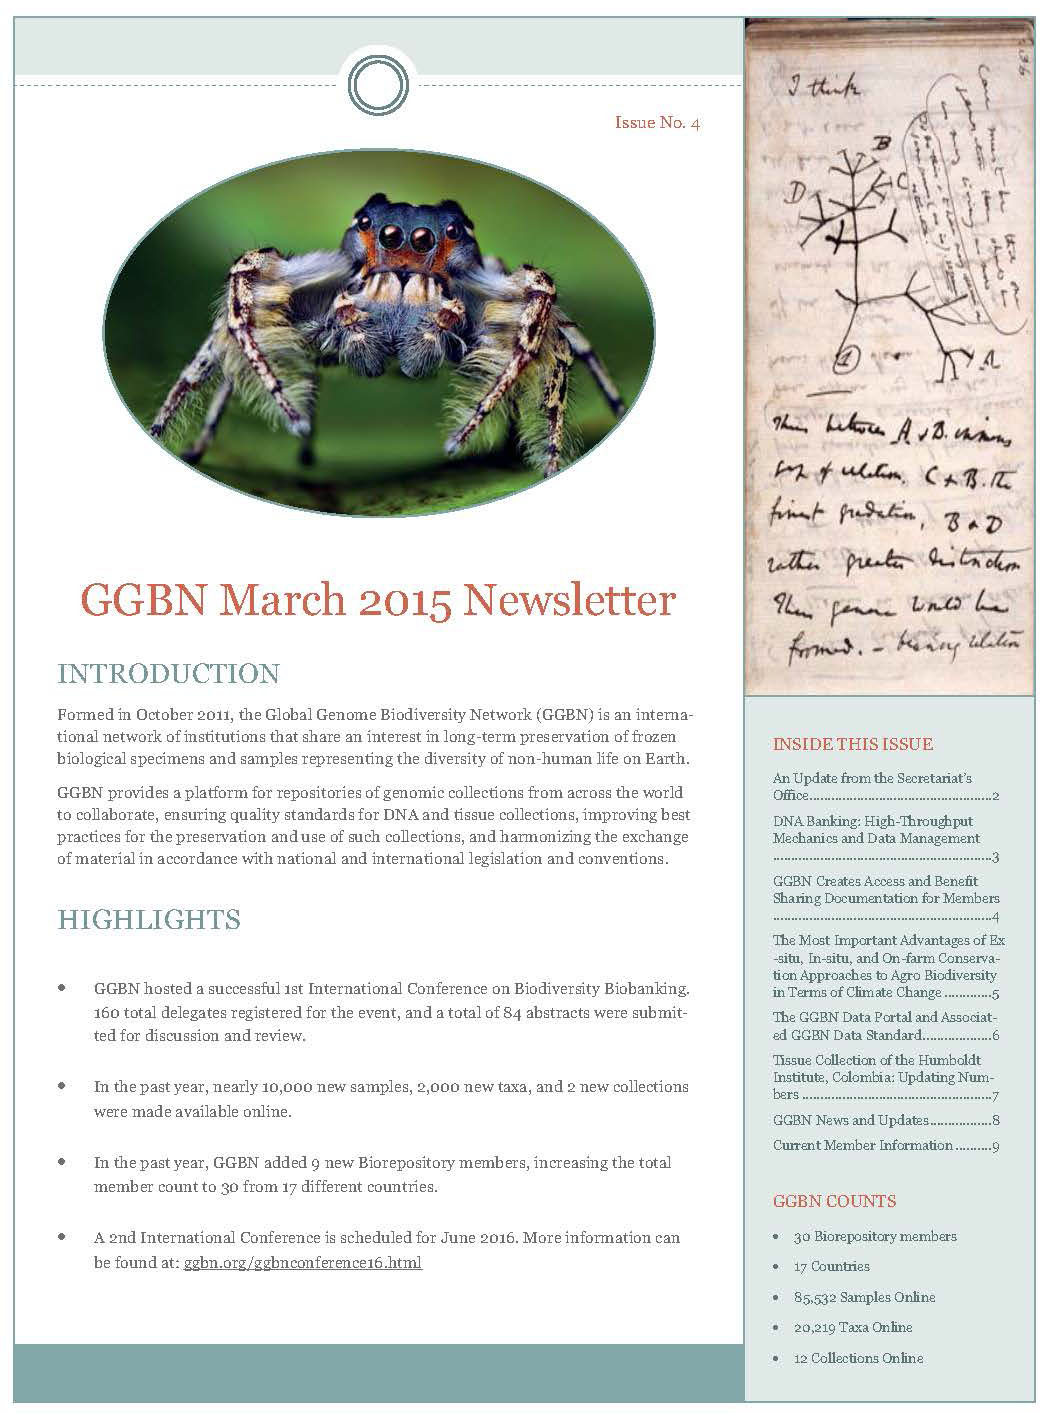 GGBN2015Newsletter.jpg